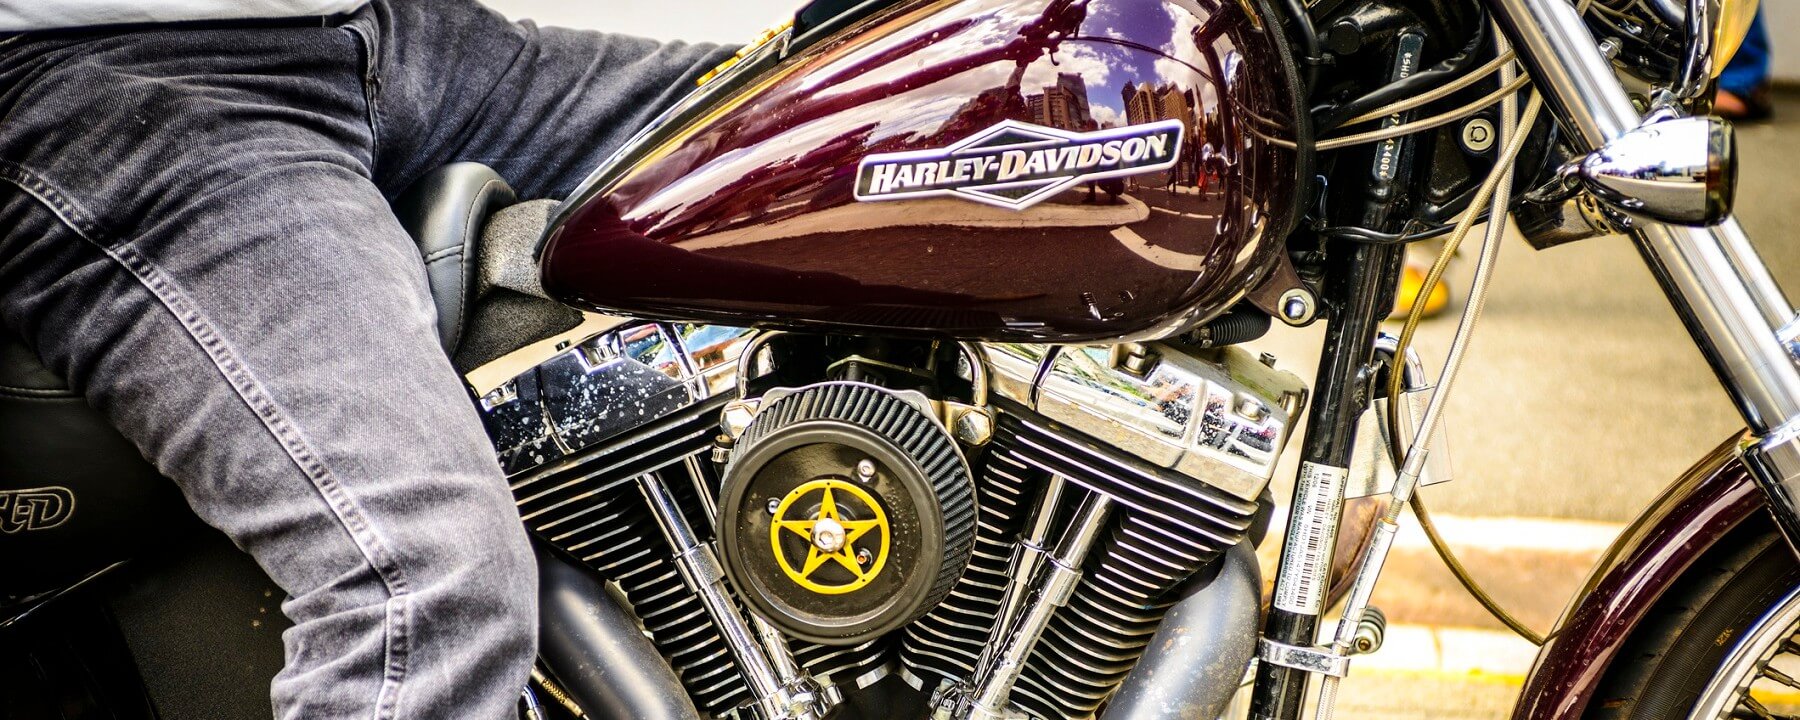 Harley Davidson Motor Cycle